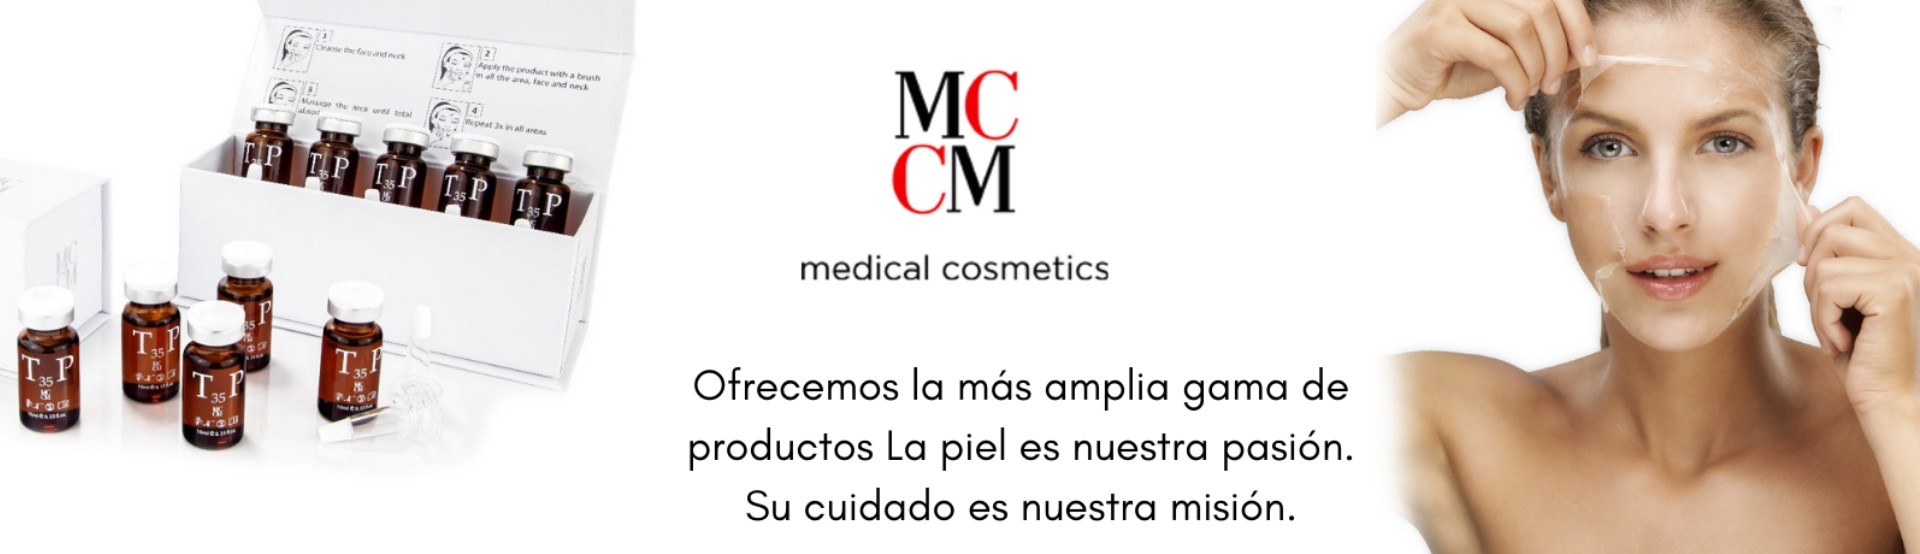 MCCM - Medical cosmetics